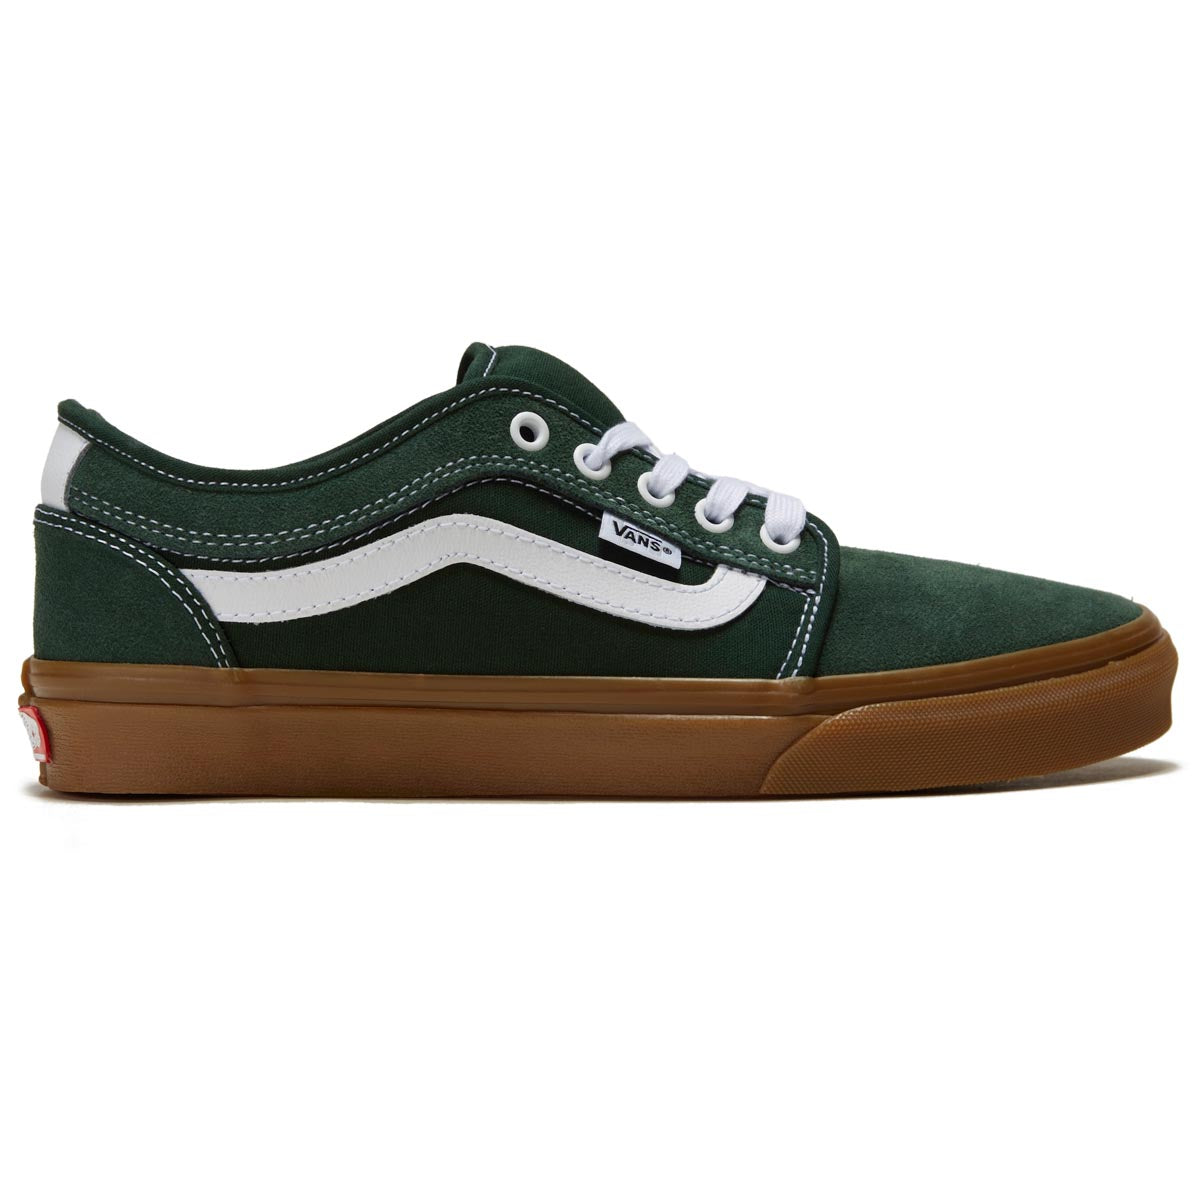 Vans Chukka Low Sidestripe Shoes - Dark Green/Gum image 1